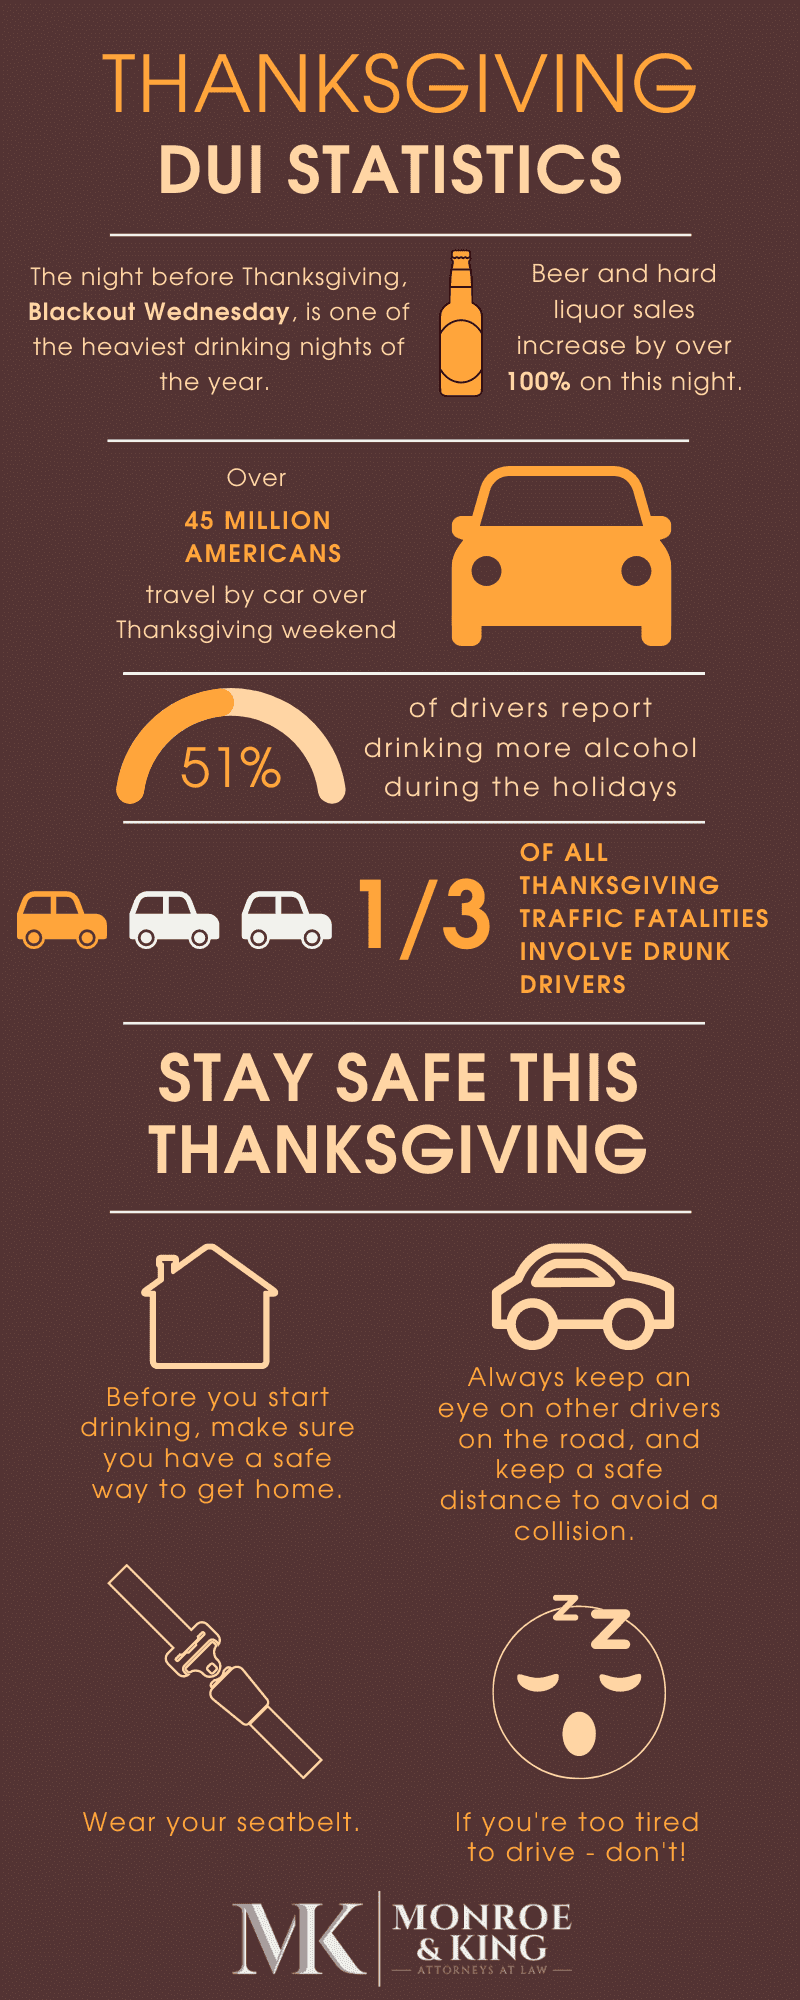 Thanksgiving DUI Statistics - Infographic